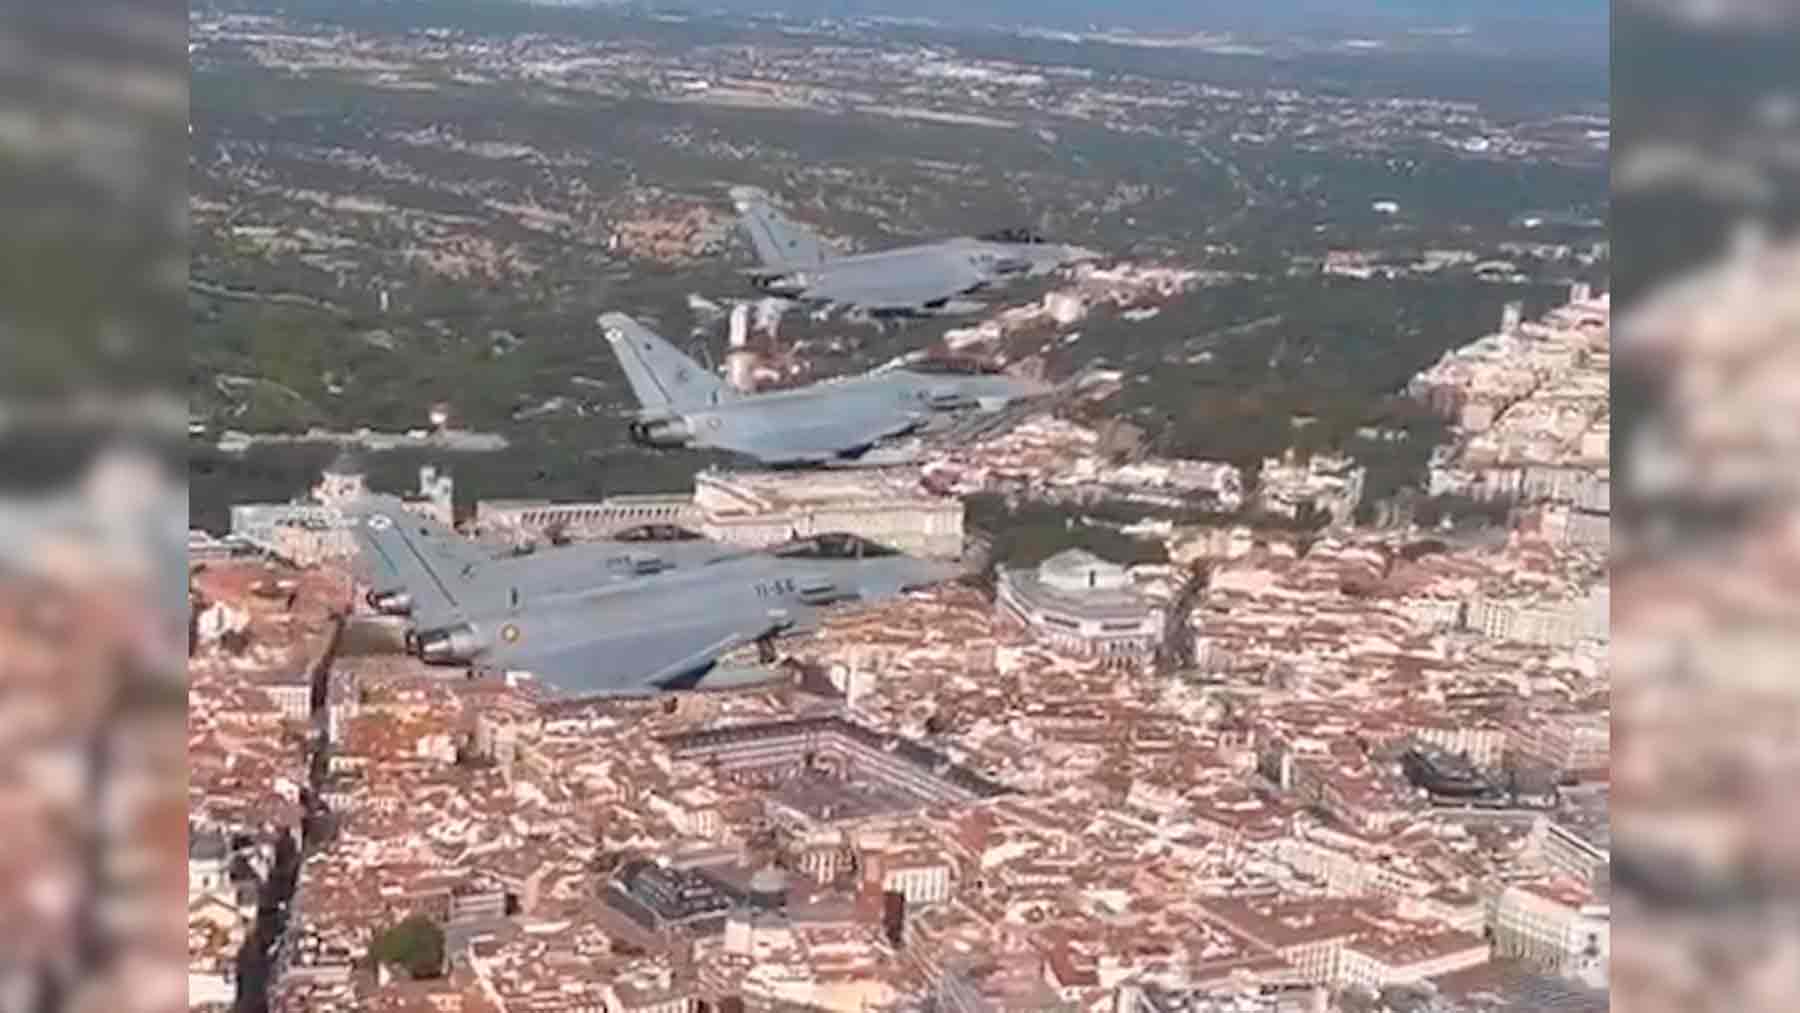 Imagen de aviones del Ejército del Aire.